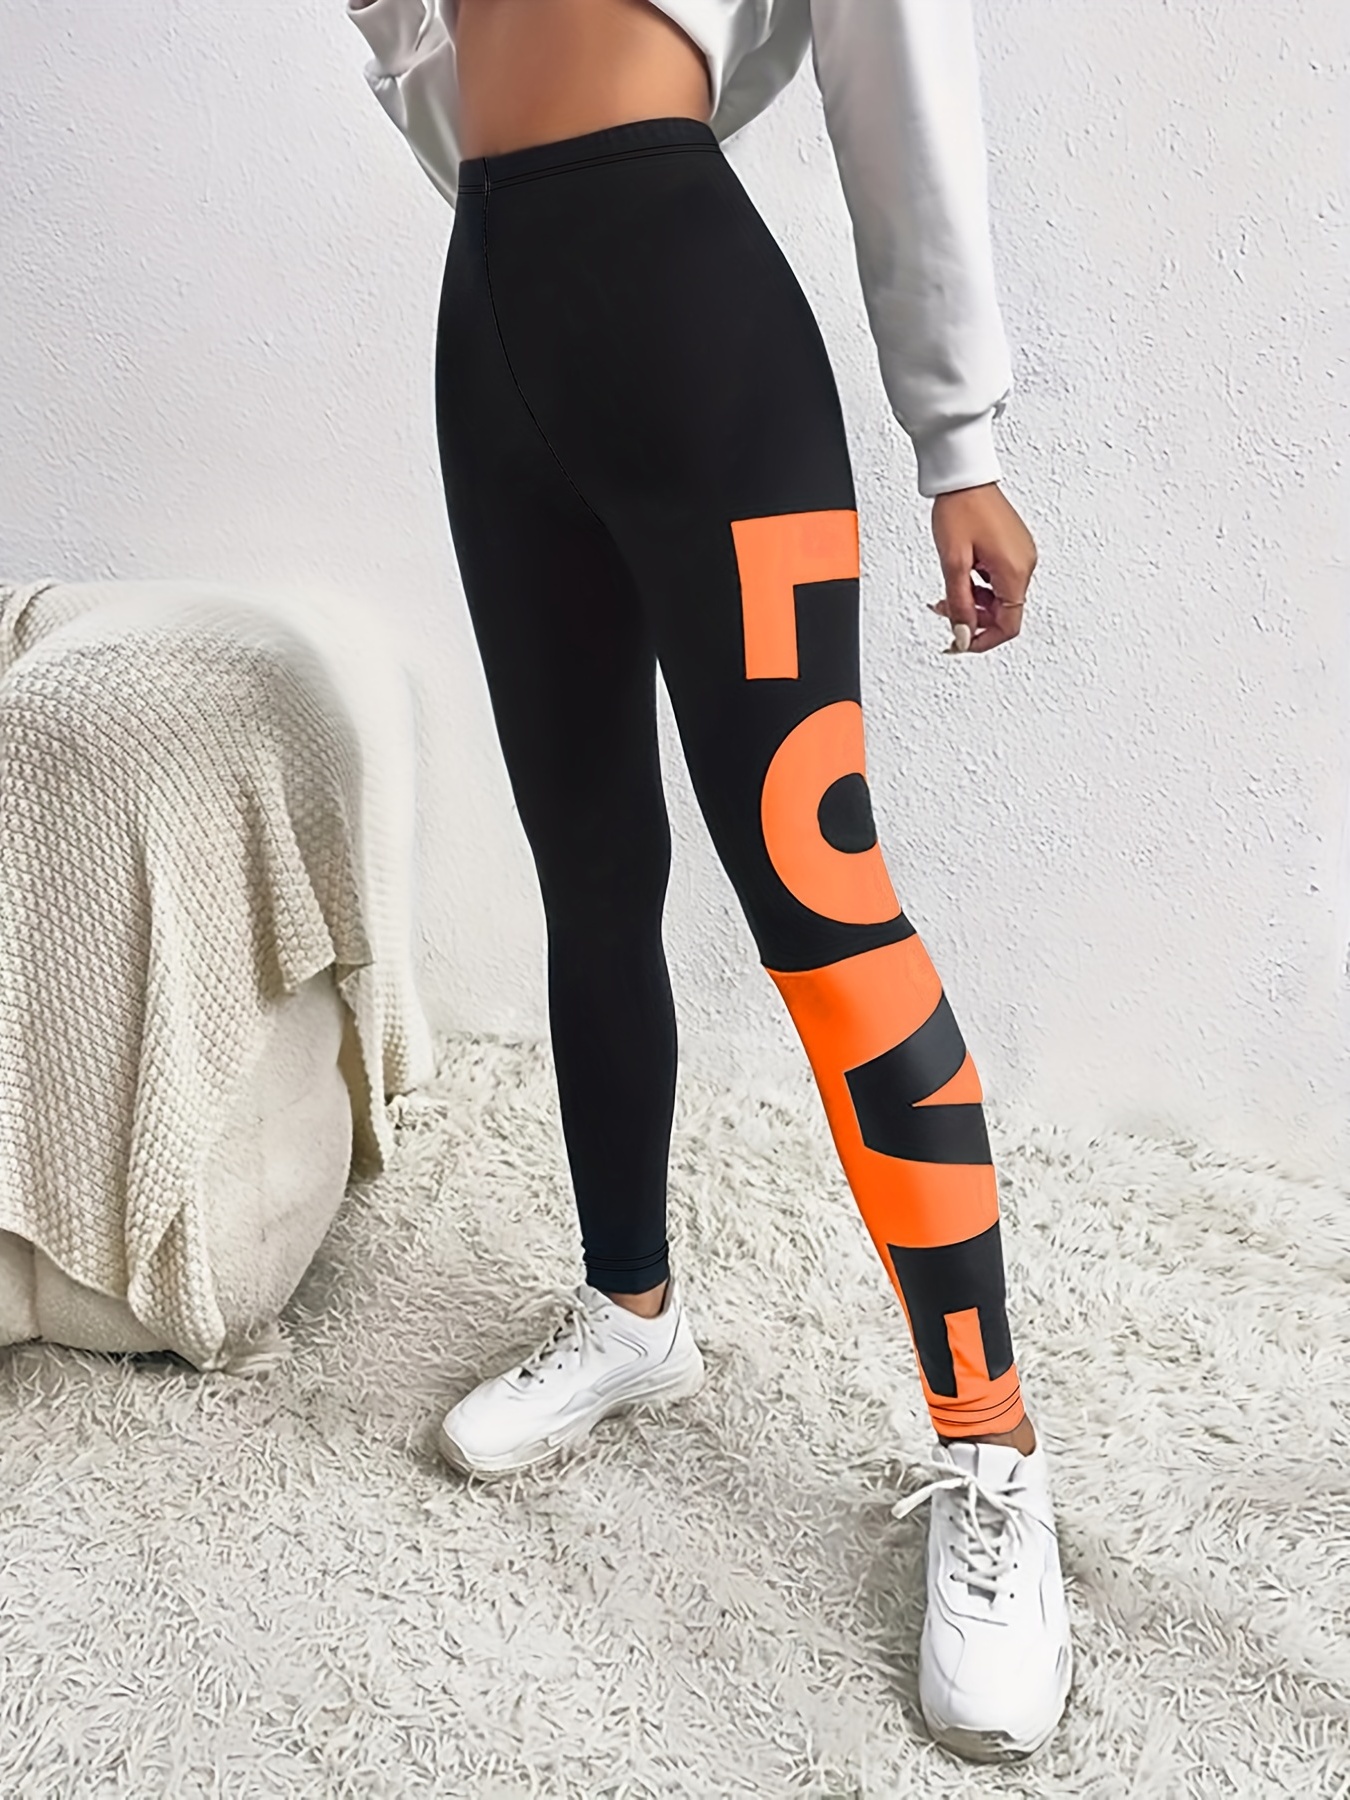 Nike Just Do It Leggings Yoga Gym Pants Women's Size Small Black